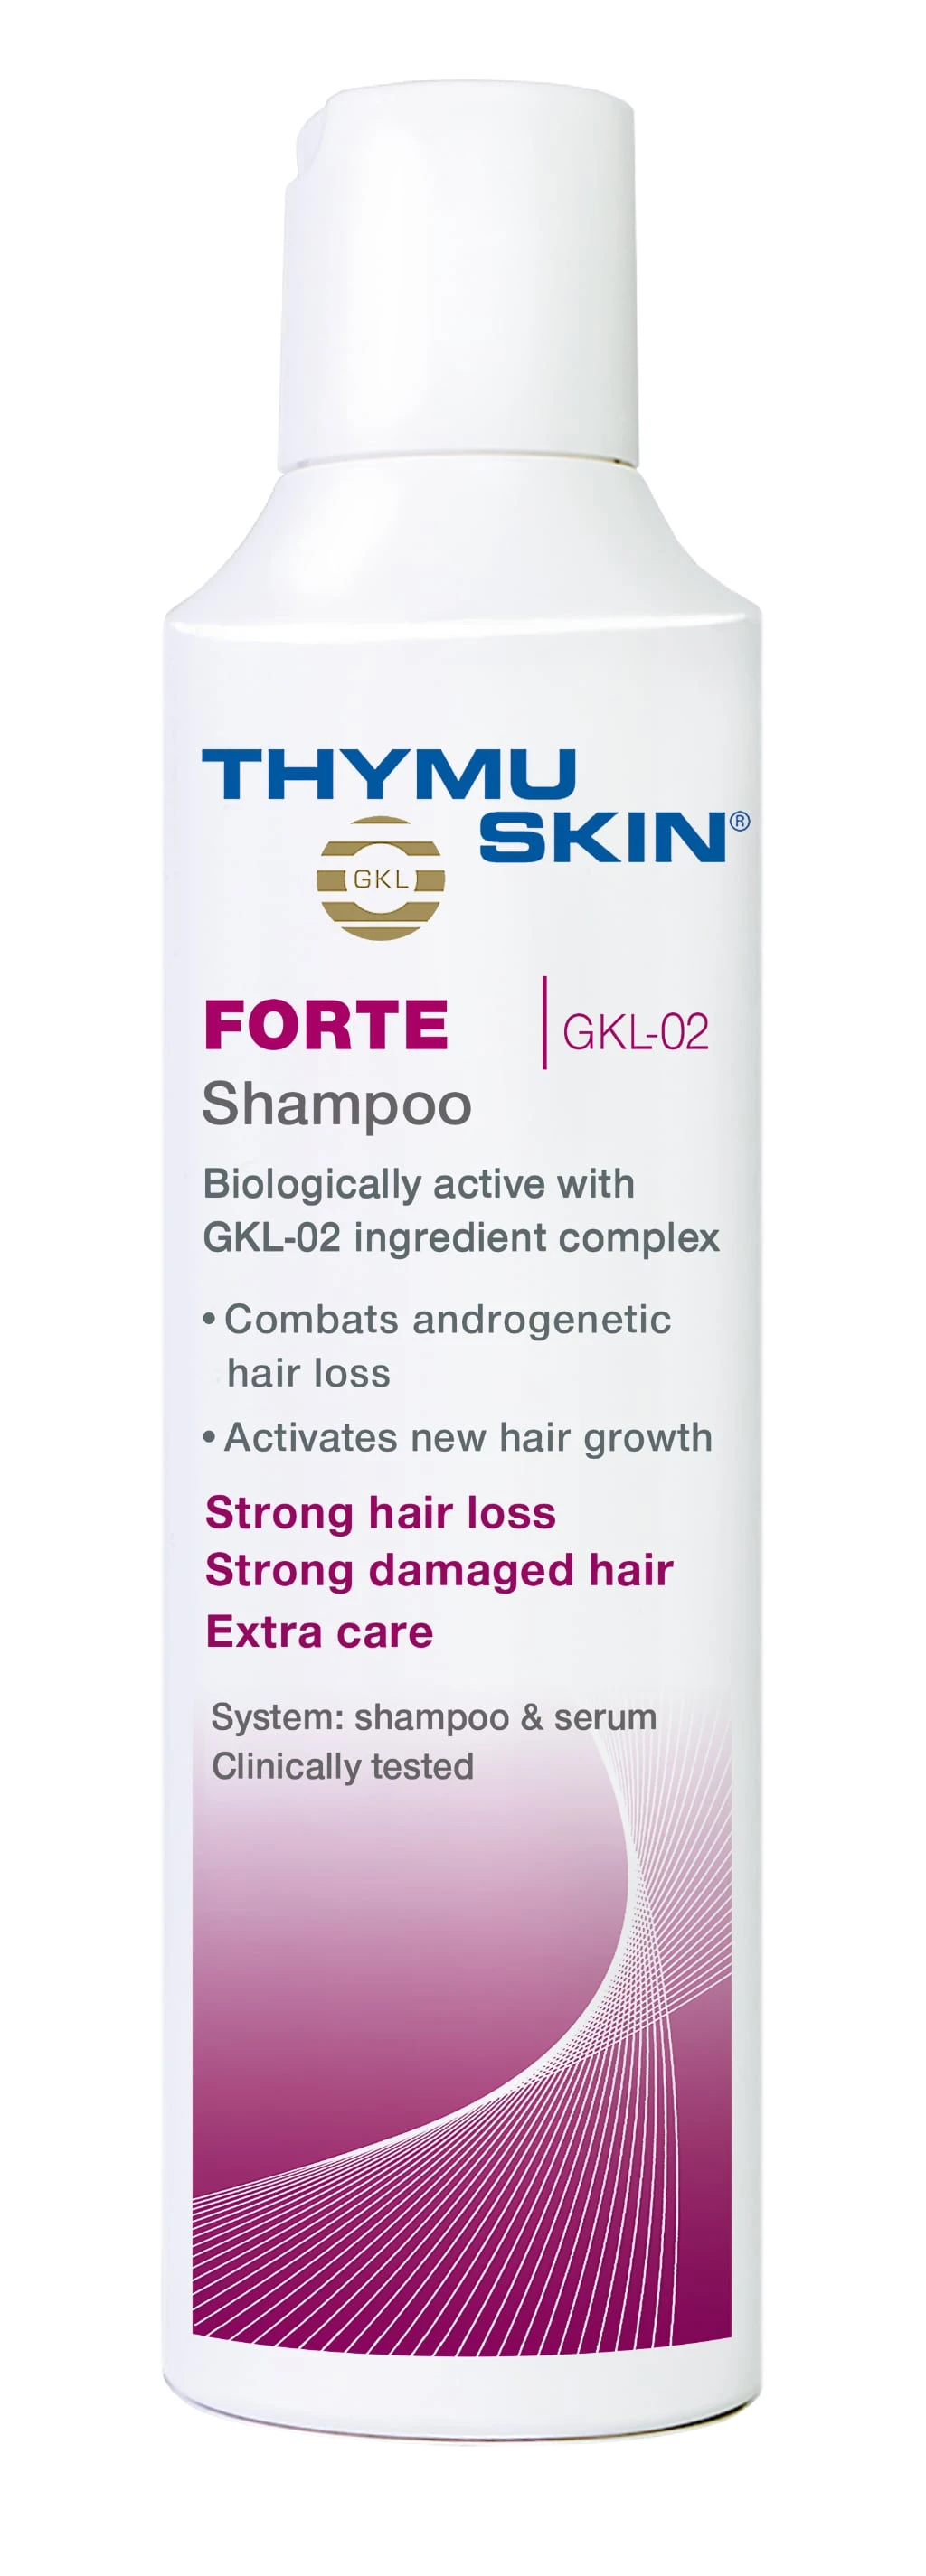 FORTE Shampoo